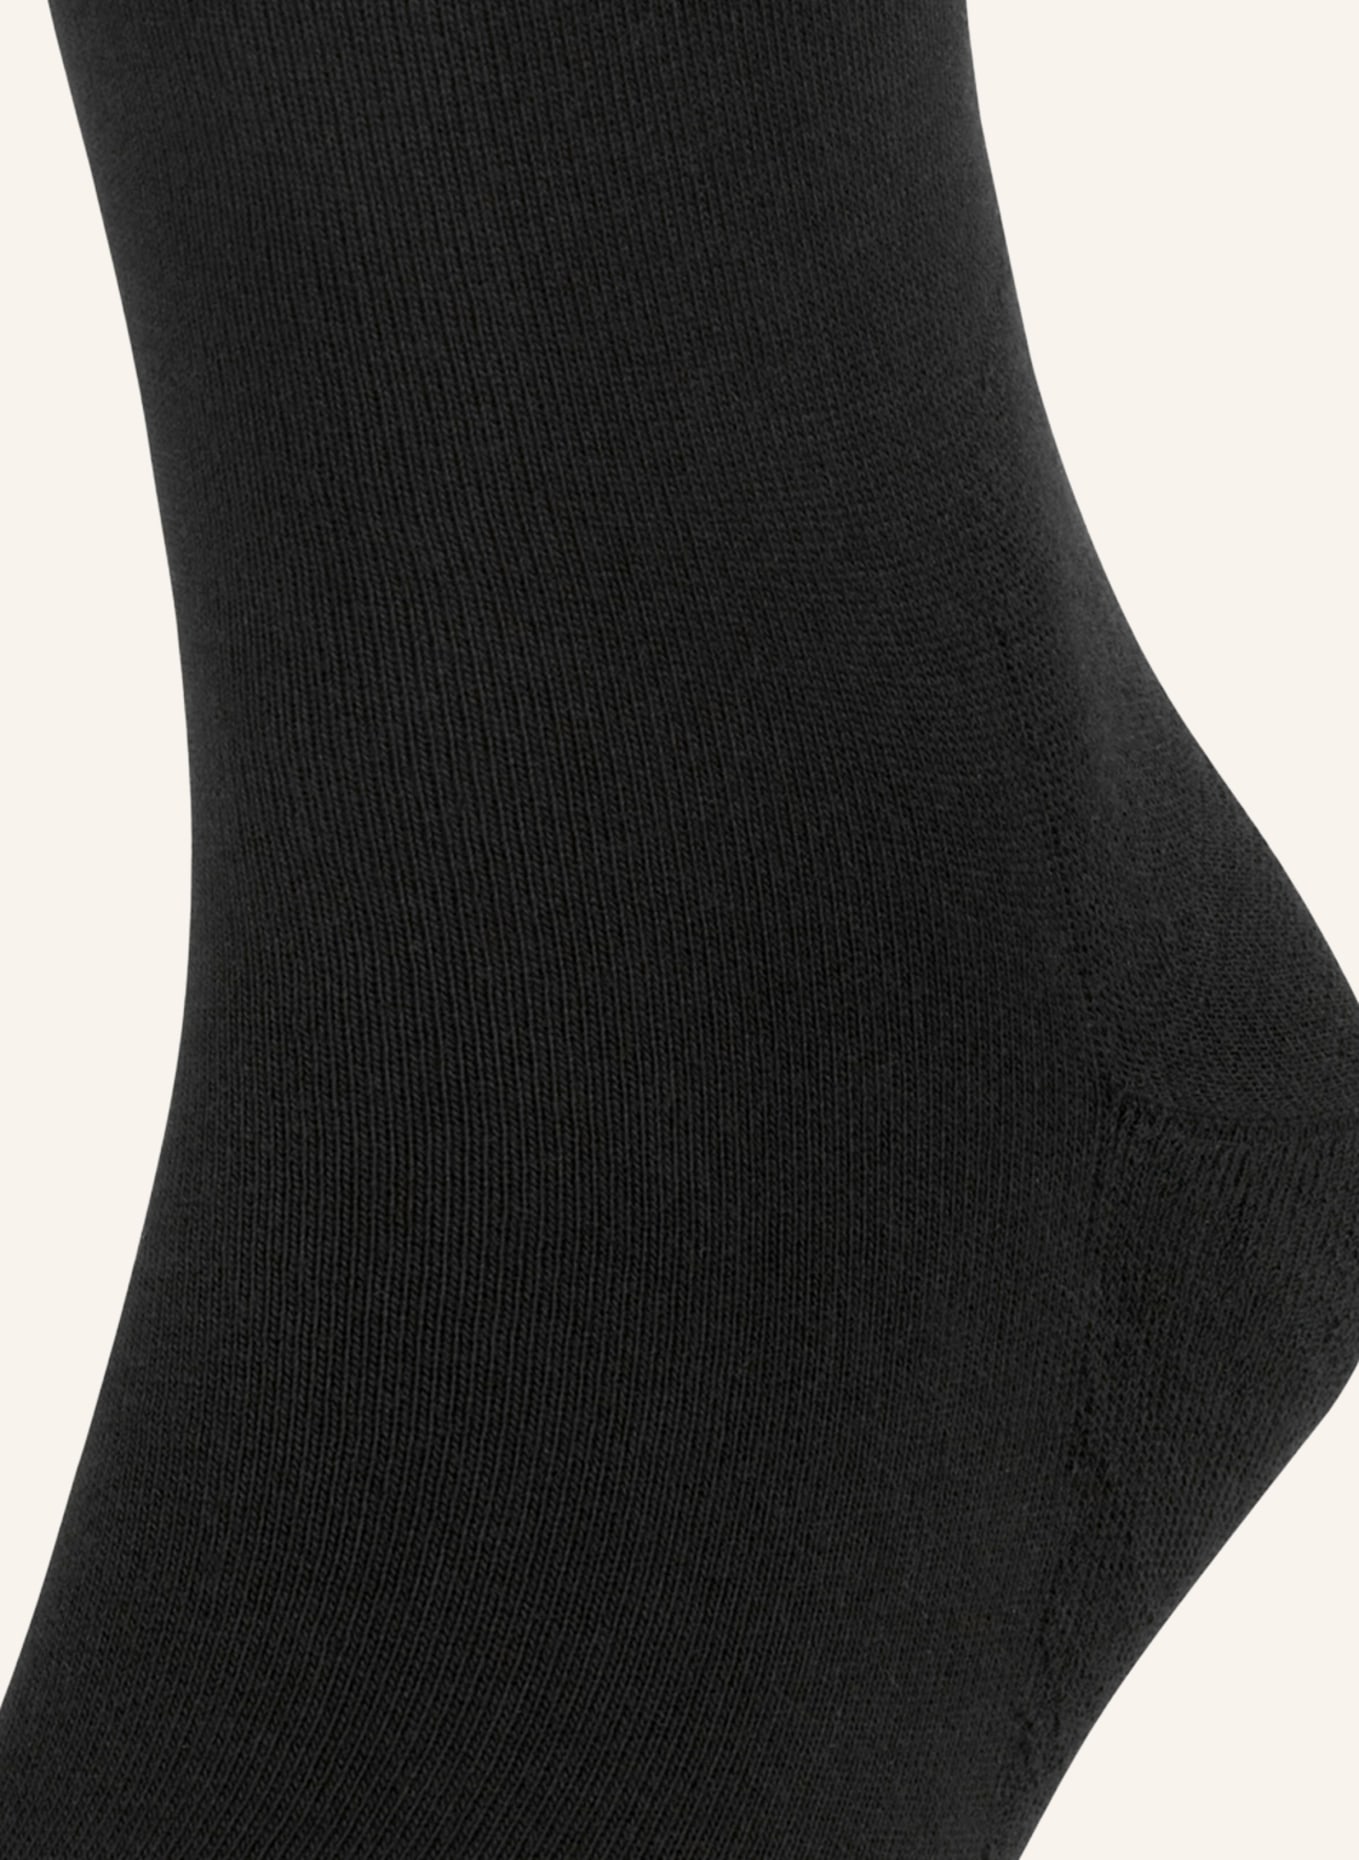 FALKE Socken RUN ERGO, Farbe: 3000 BLACK (Bild 3)